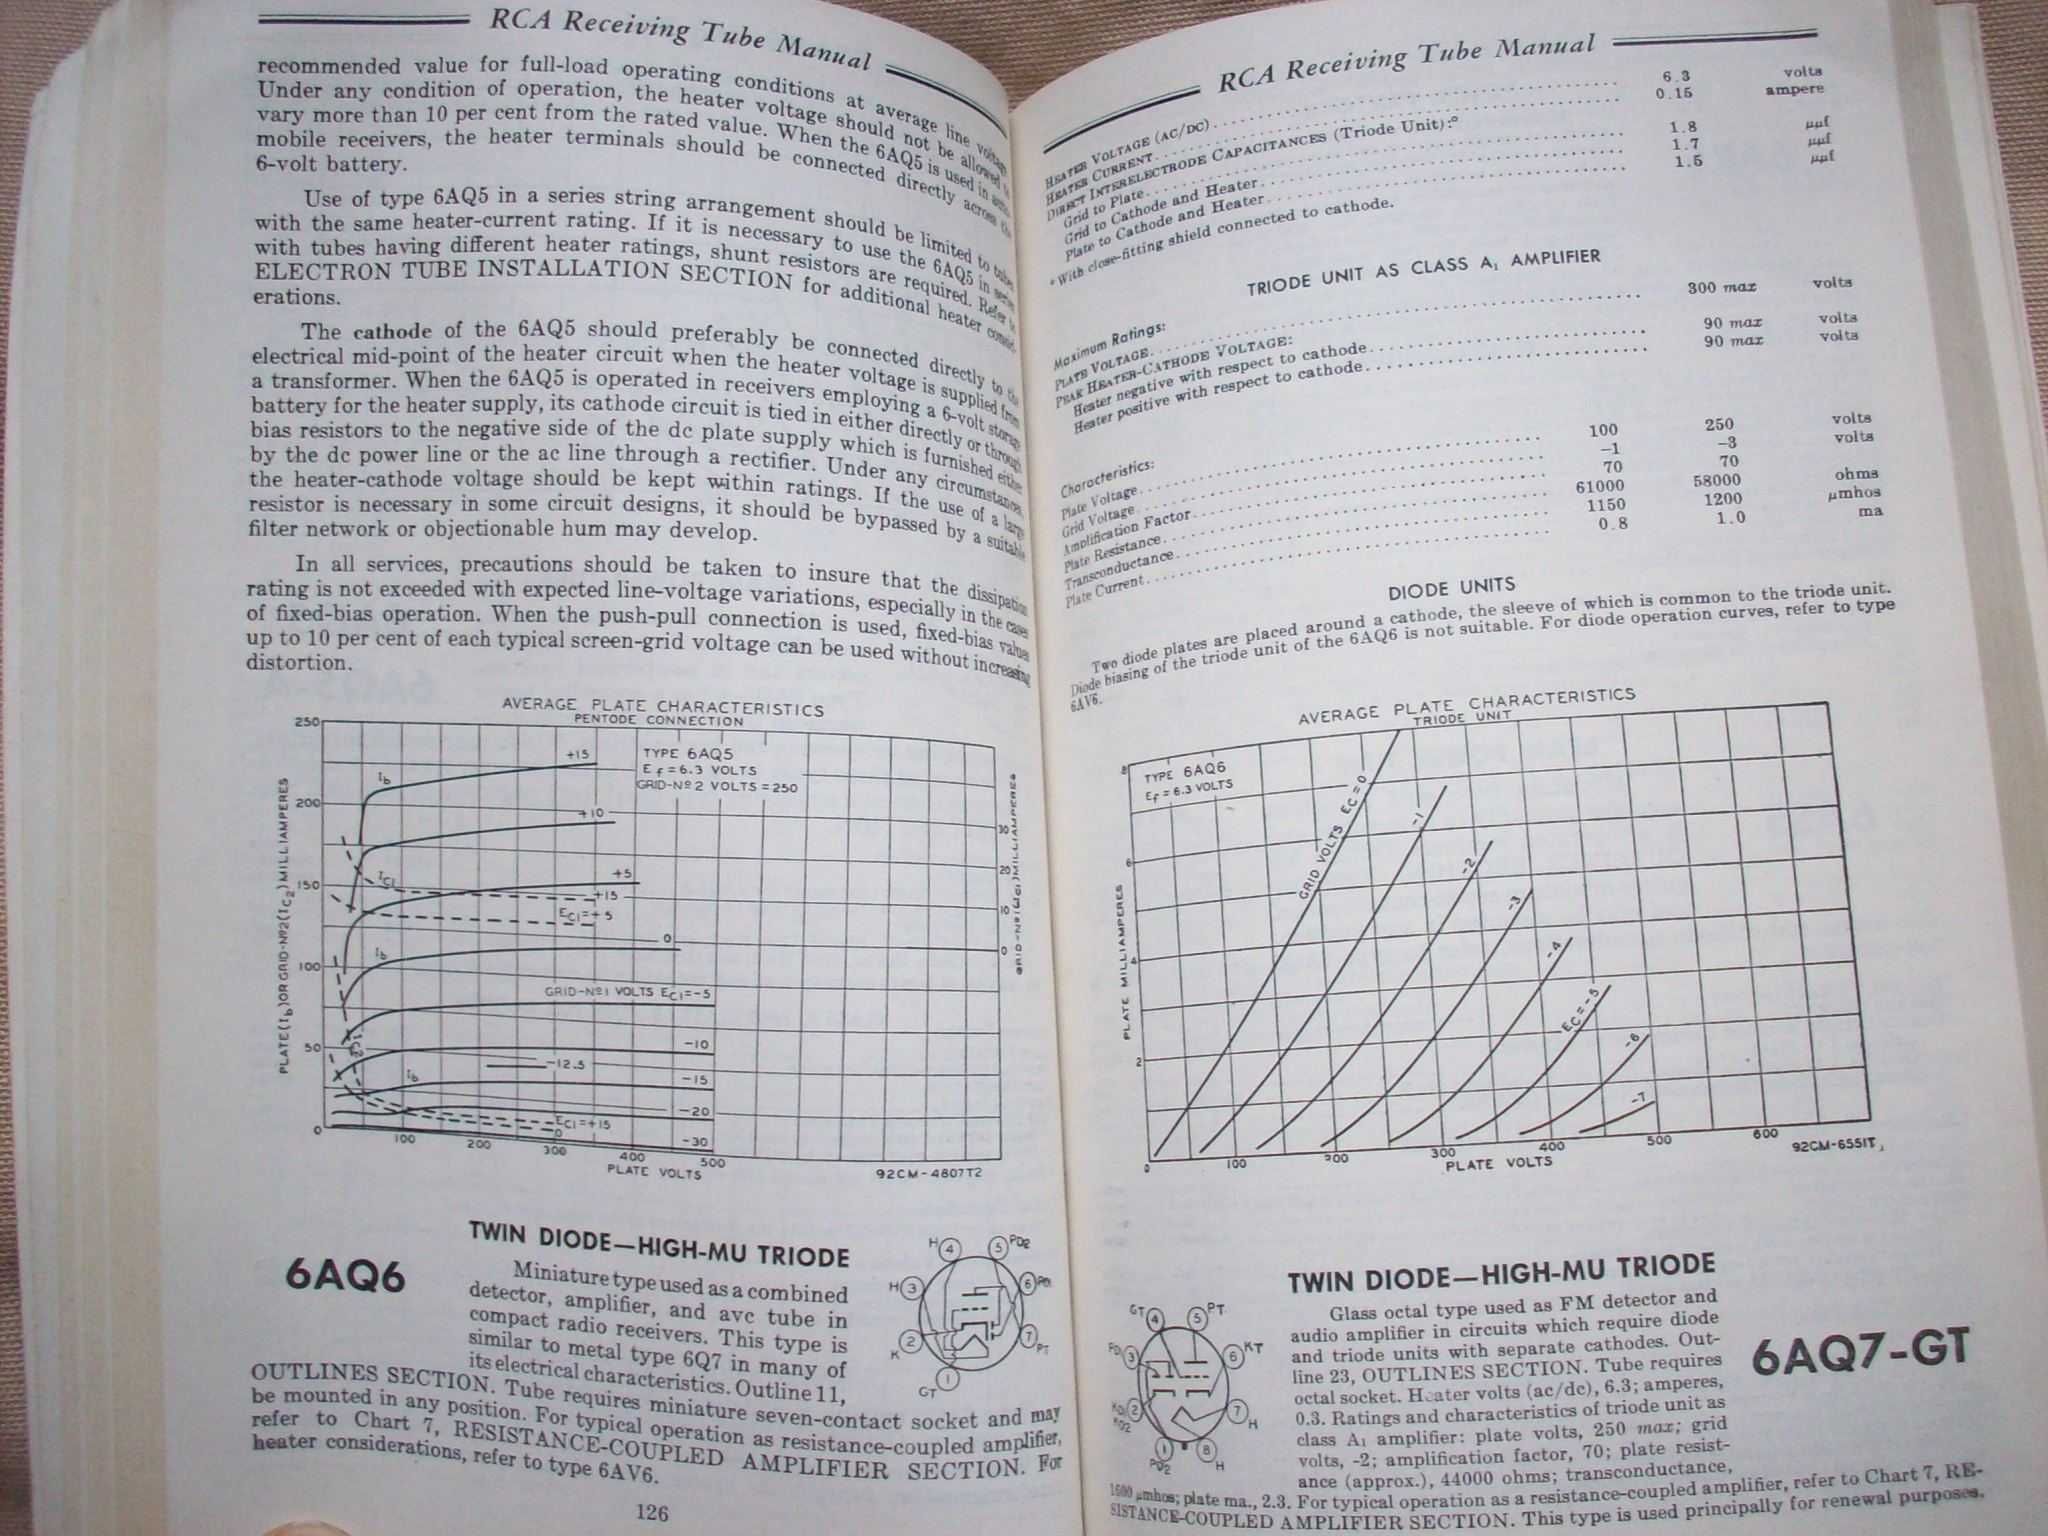 RCA Receiving Tube Manual.